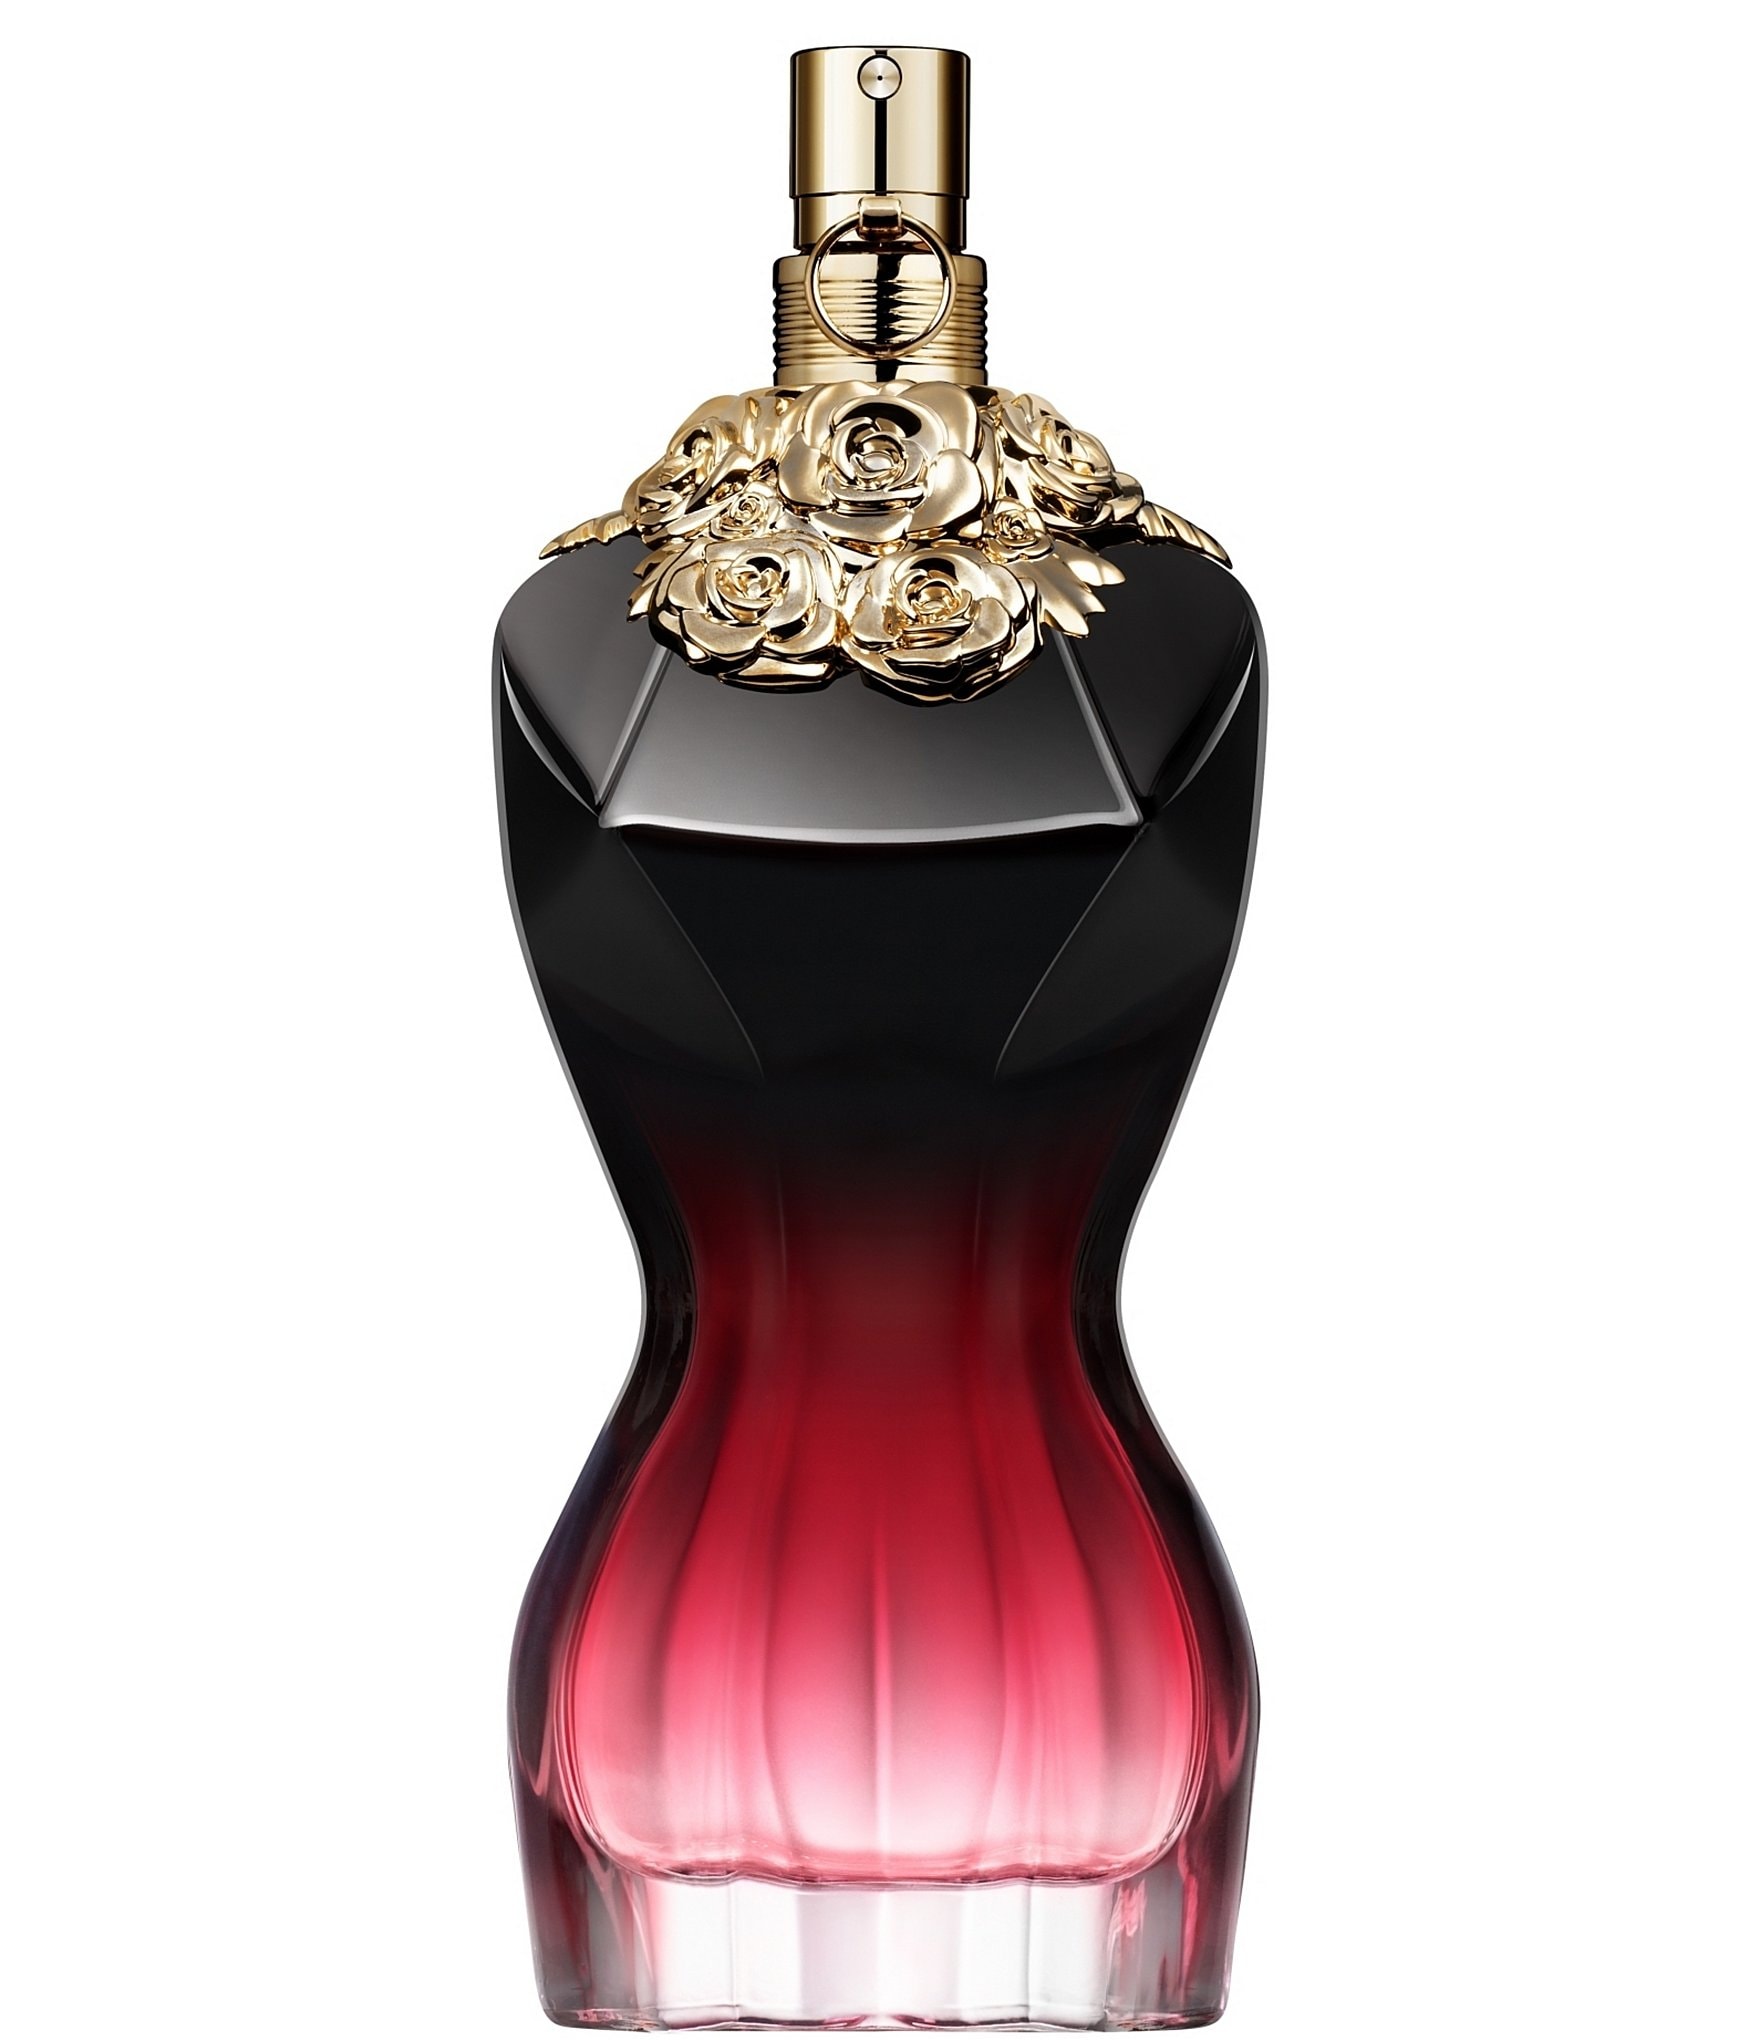 Jean Paul Gaultier Fragrance, Perfume, & Cologne for Women & Men